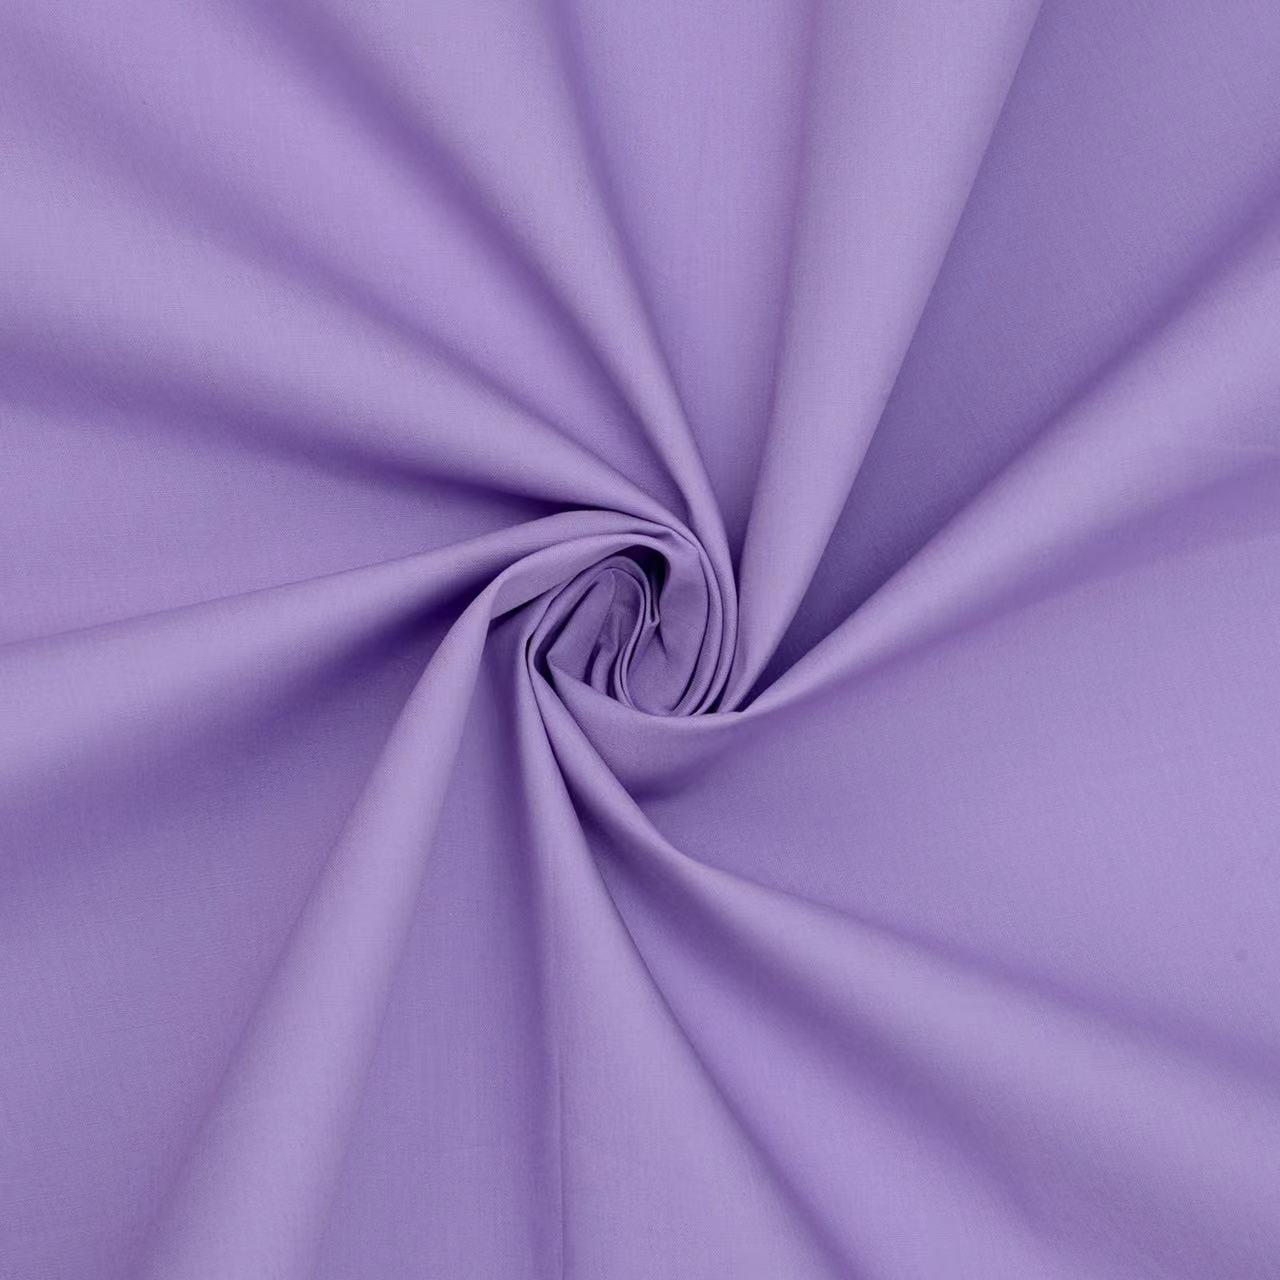 purple polyester cotton fabric